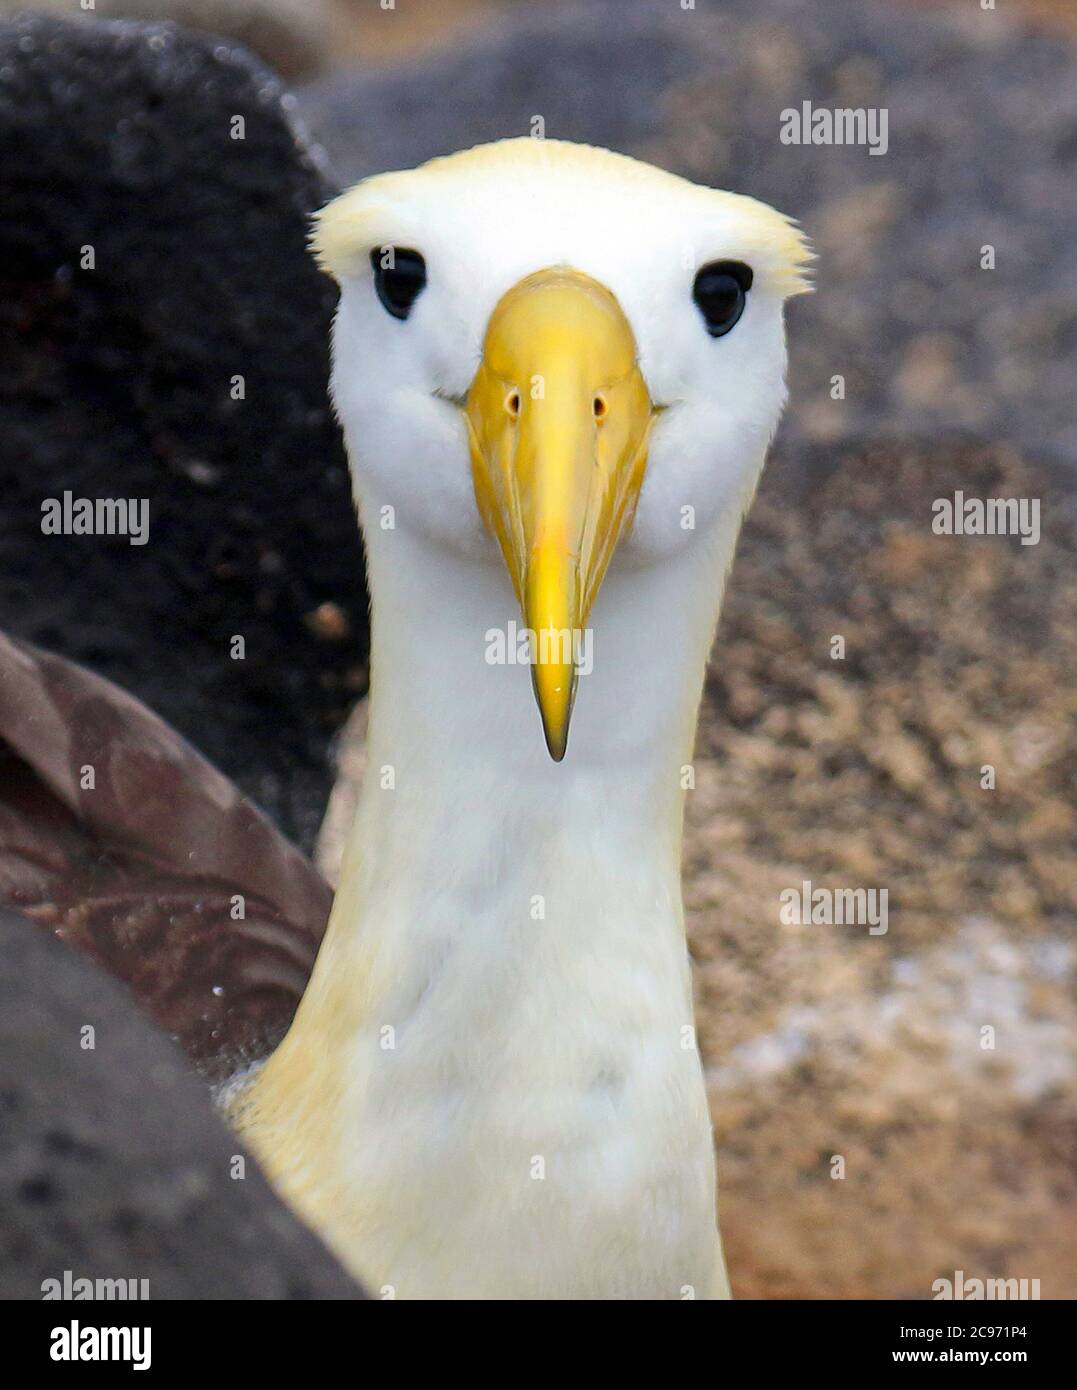 Albatros ondulés, albatros de Galapagos (Diomedea irrorata, Phoebastria irrorata), regardant dans la caméra, Albatros ondulés en danger critique sur l'île d'Espanola, Equateur, îles Galapagos, Espanola Banque D'Images